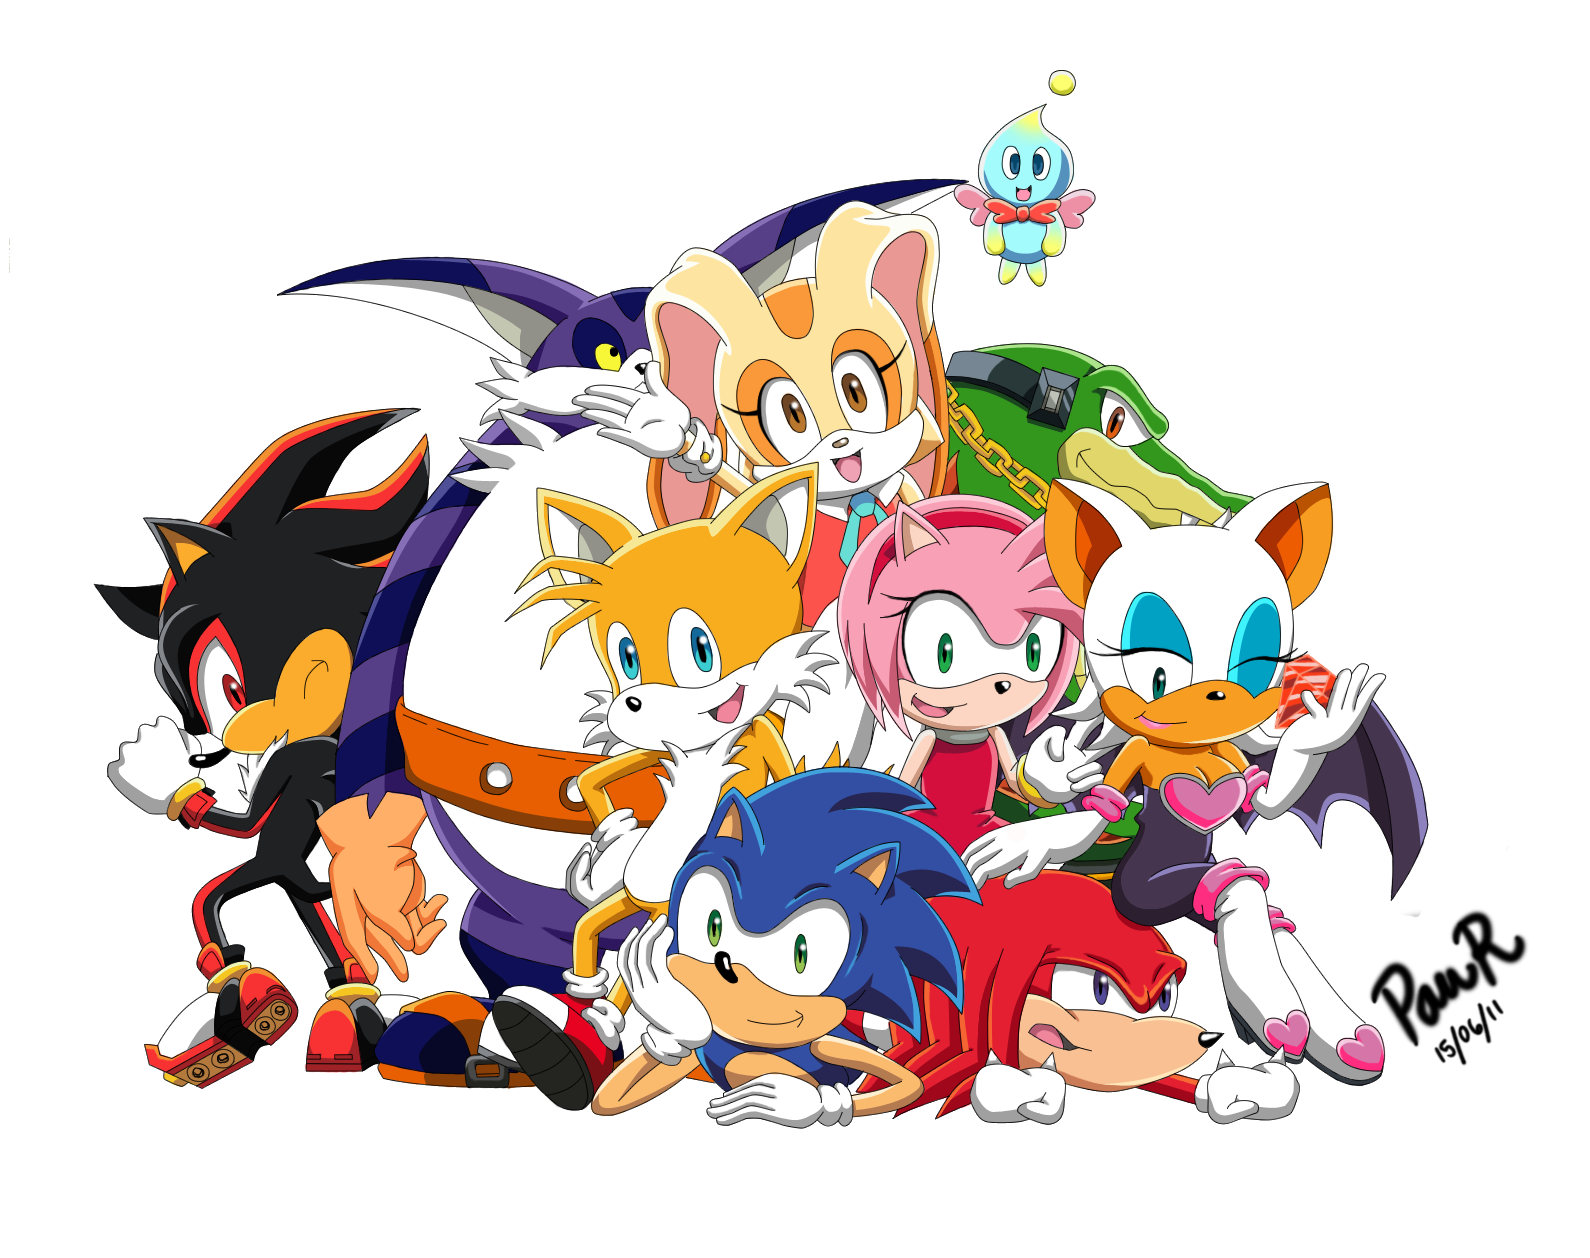 Sonic x hedgehog. Соник Икс Соник. Соник Икс и его друзья. Команда Соника Икс. Персонажи Соника и его друзья.